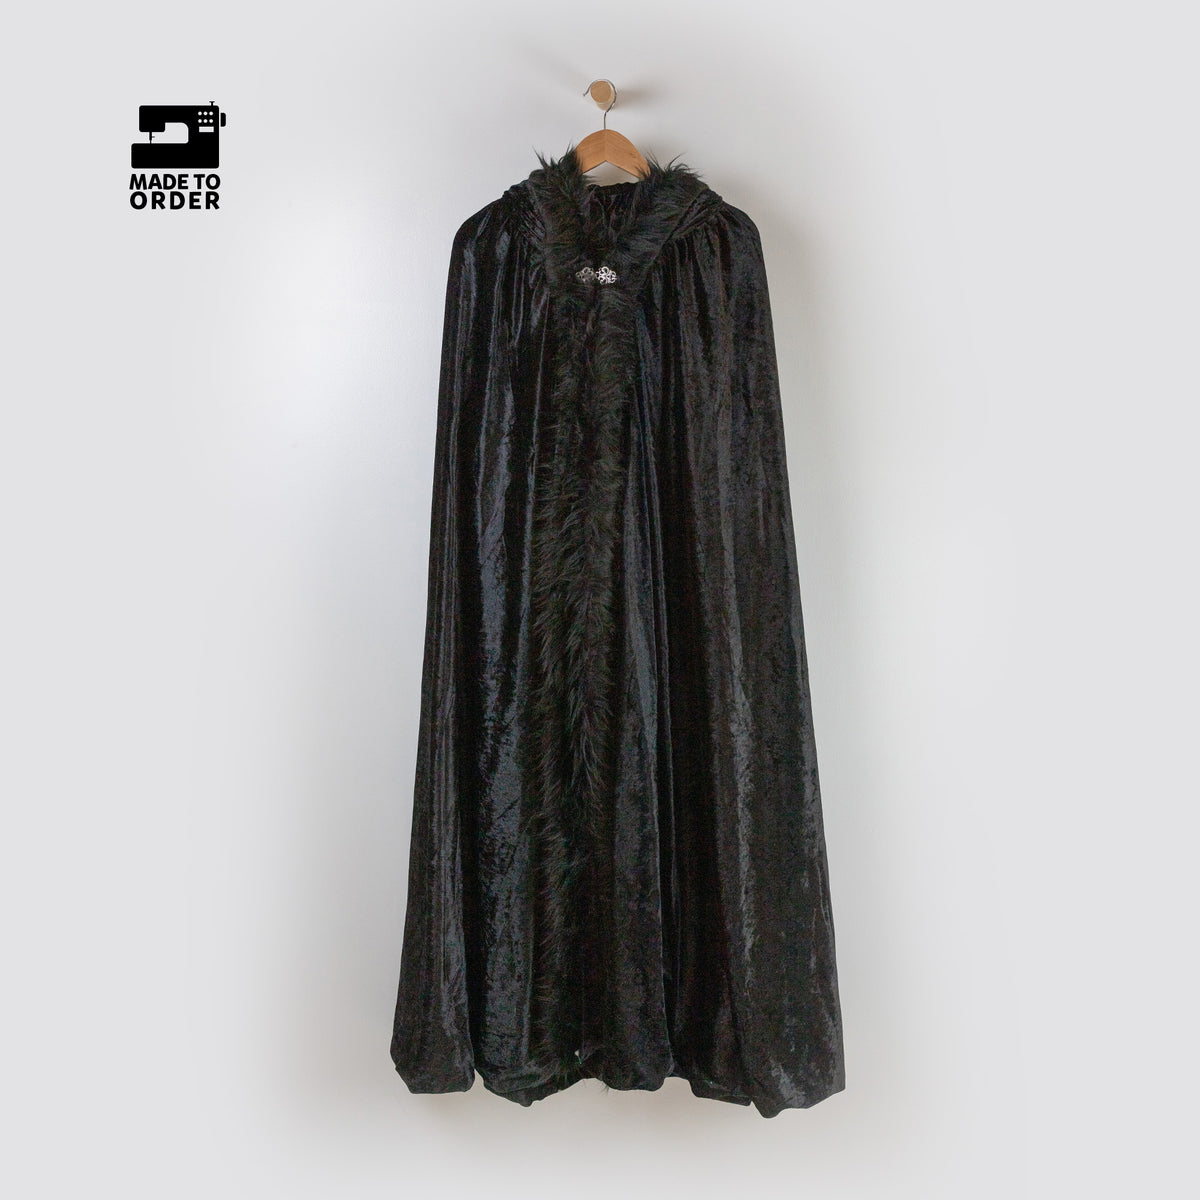 black hooded cloak for women